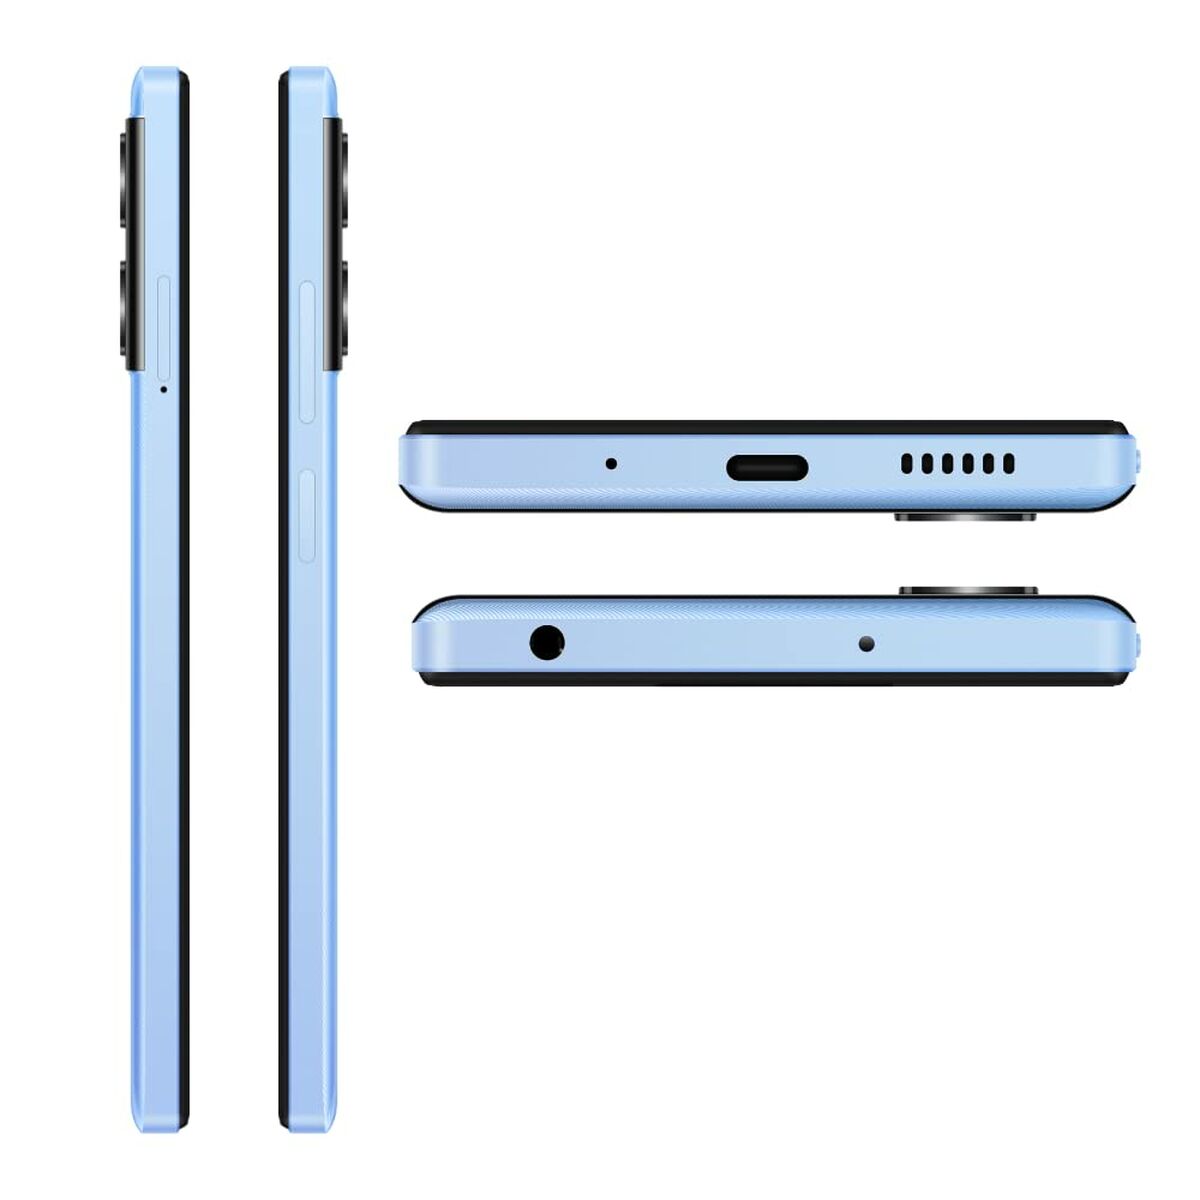 Smartphone Poco M4 Blue 16 GB RAM 128 GB 6,58“